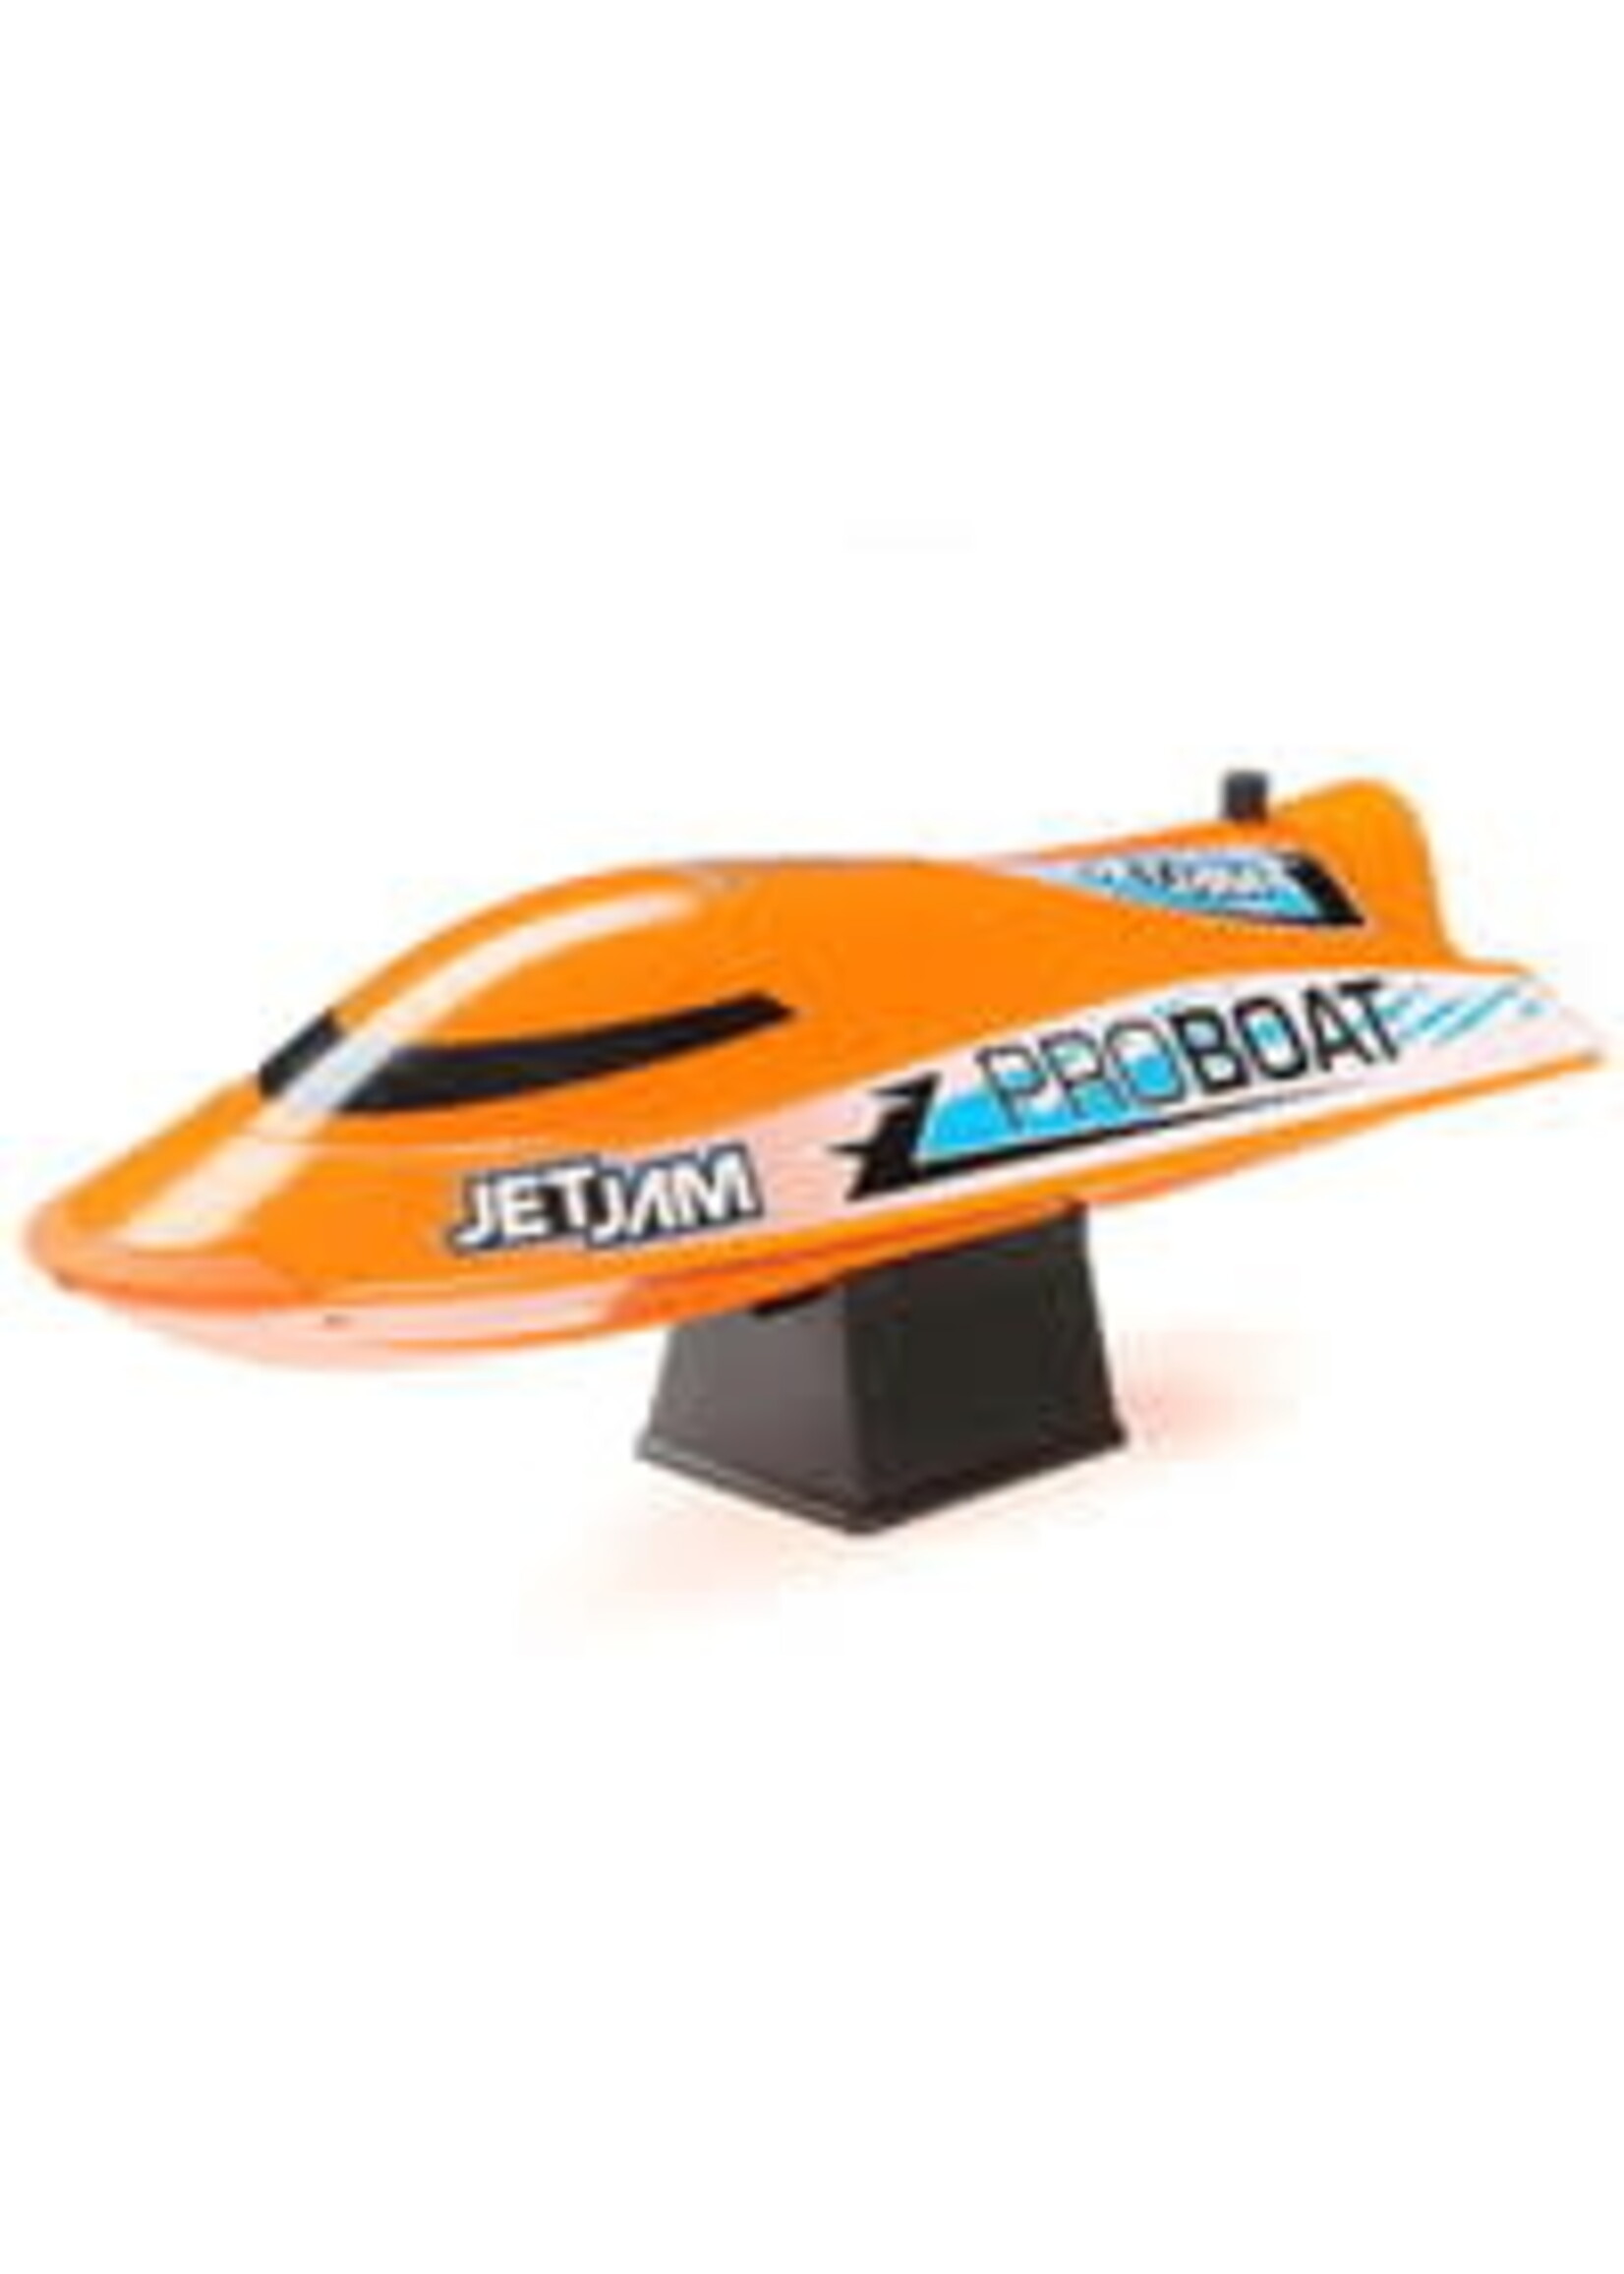 Proboat PRB08031V2T1 Jet Jam V2 12" Self-Righting Pool Racer Brushed RTR, Orange